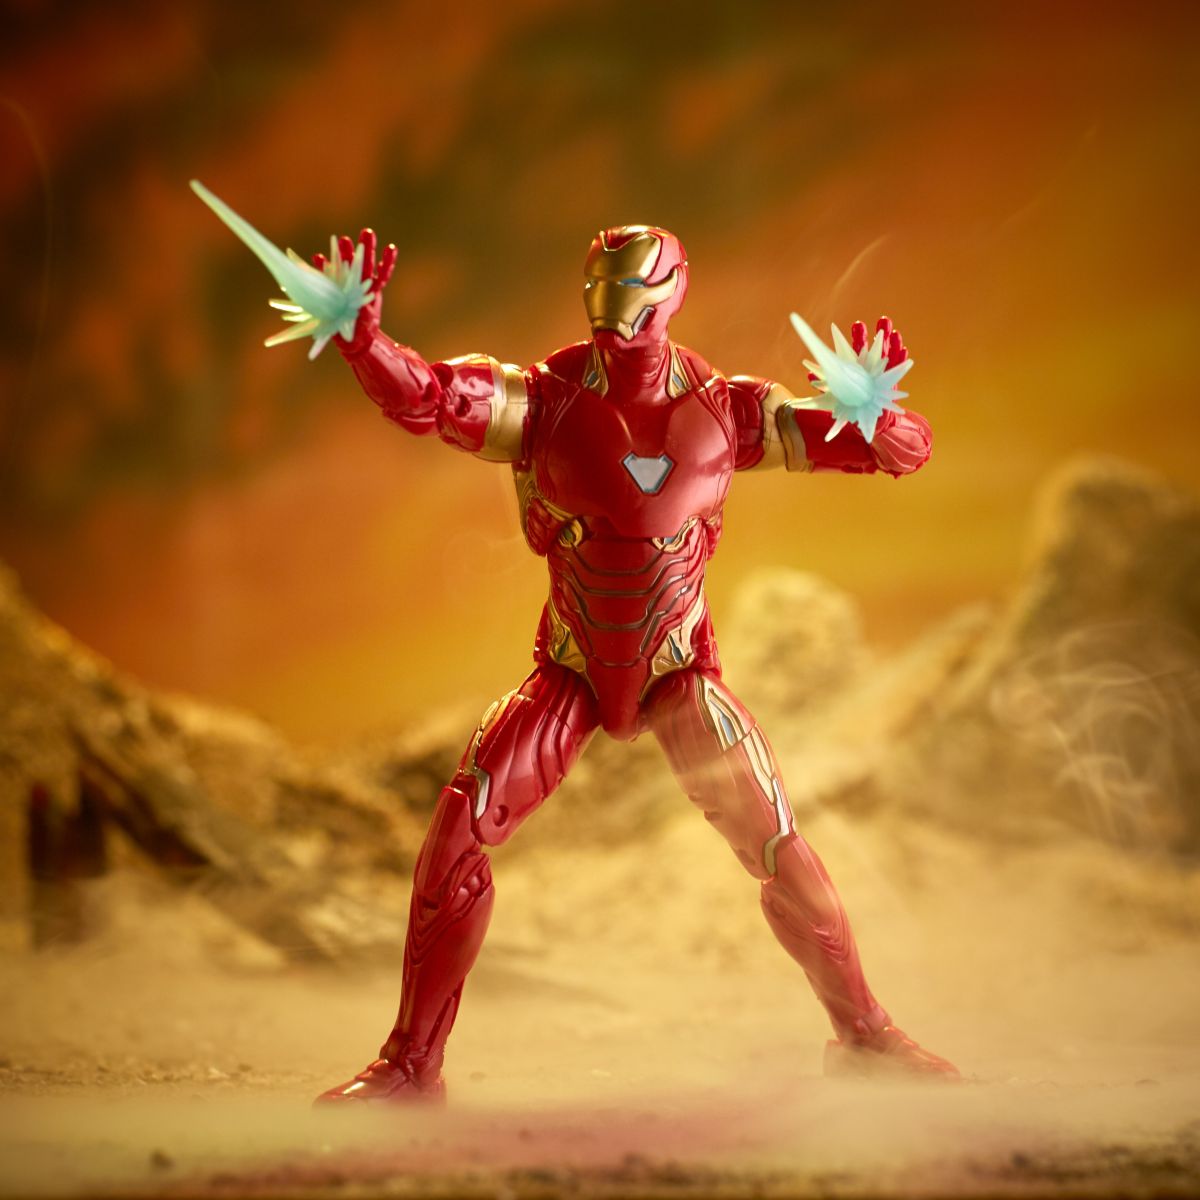 Marvel Avengers Infinity War Legends Series 6 Inch Figure Assortment Iron Man Oop